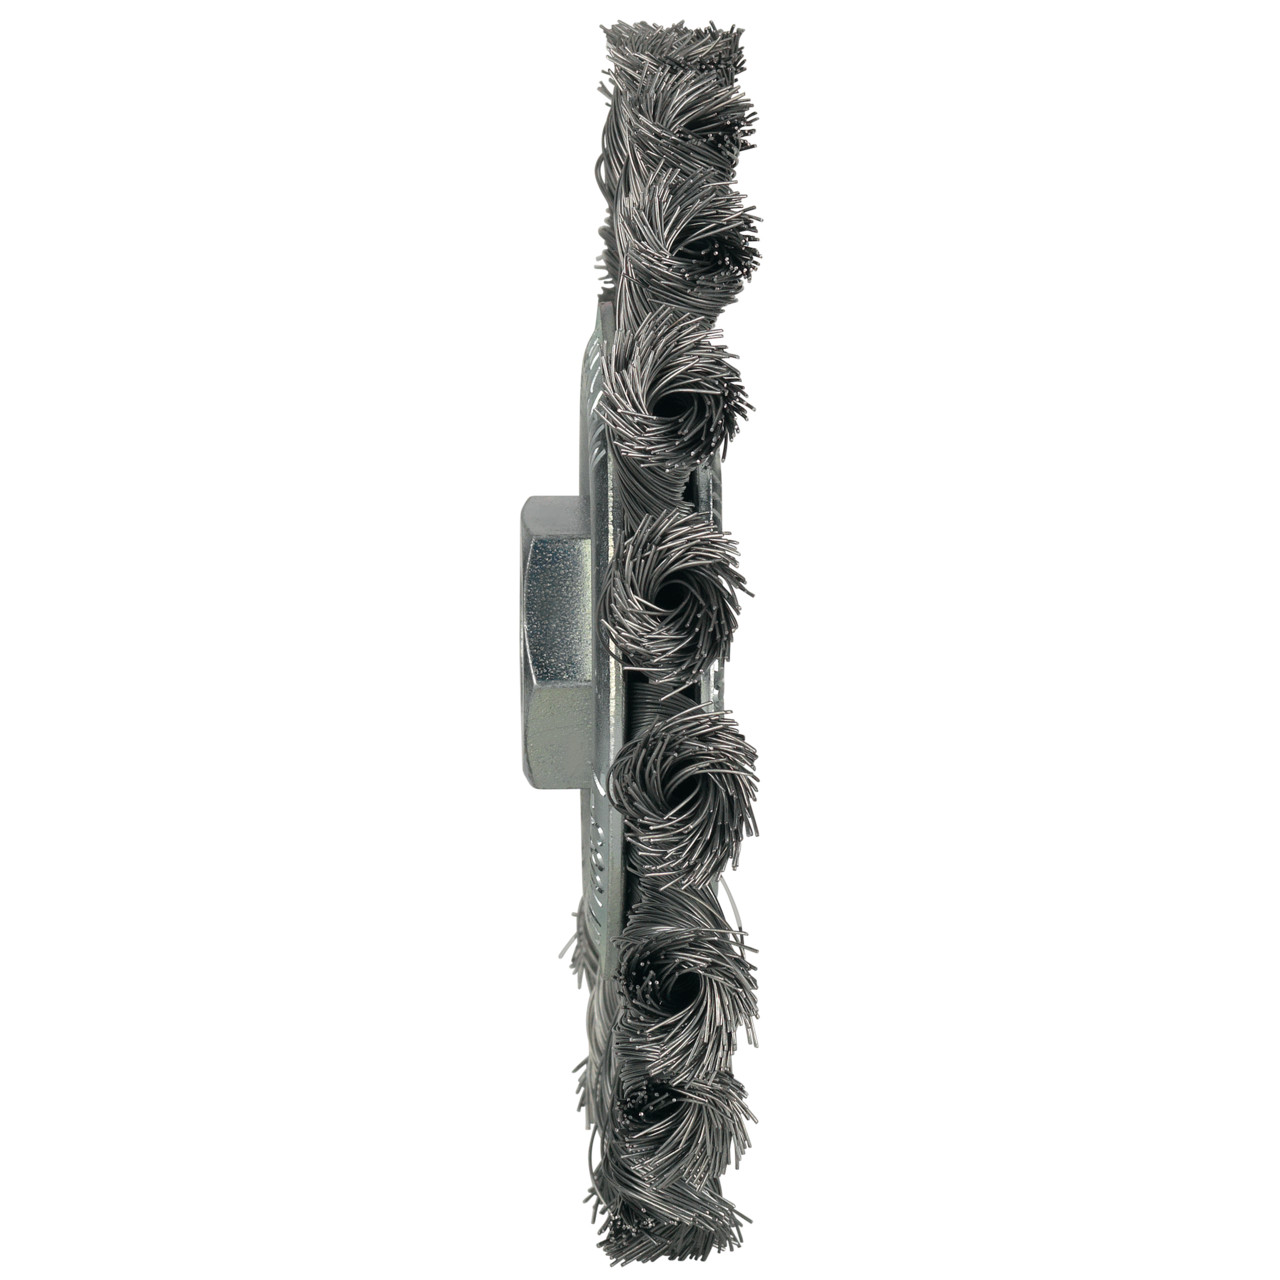 Tyrolit Cepillos para ruedas DxAxLxGE 115x11x23xM14 Para acero, forma: 1RDZ - (cepillo para ruedas), Art. 960324